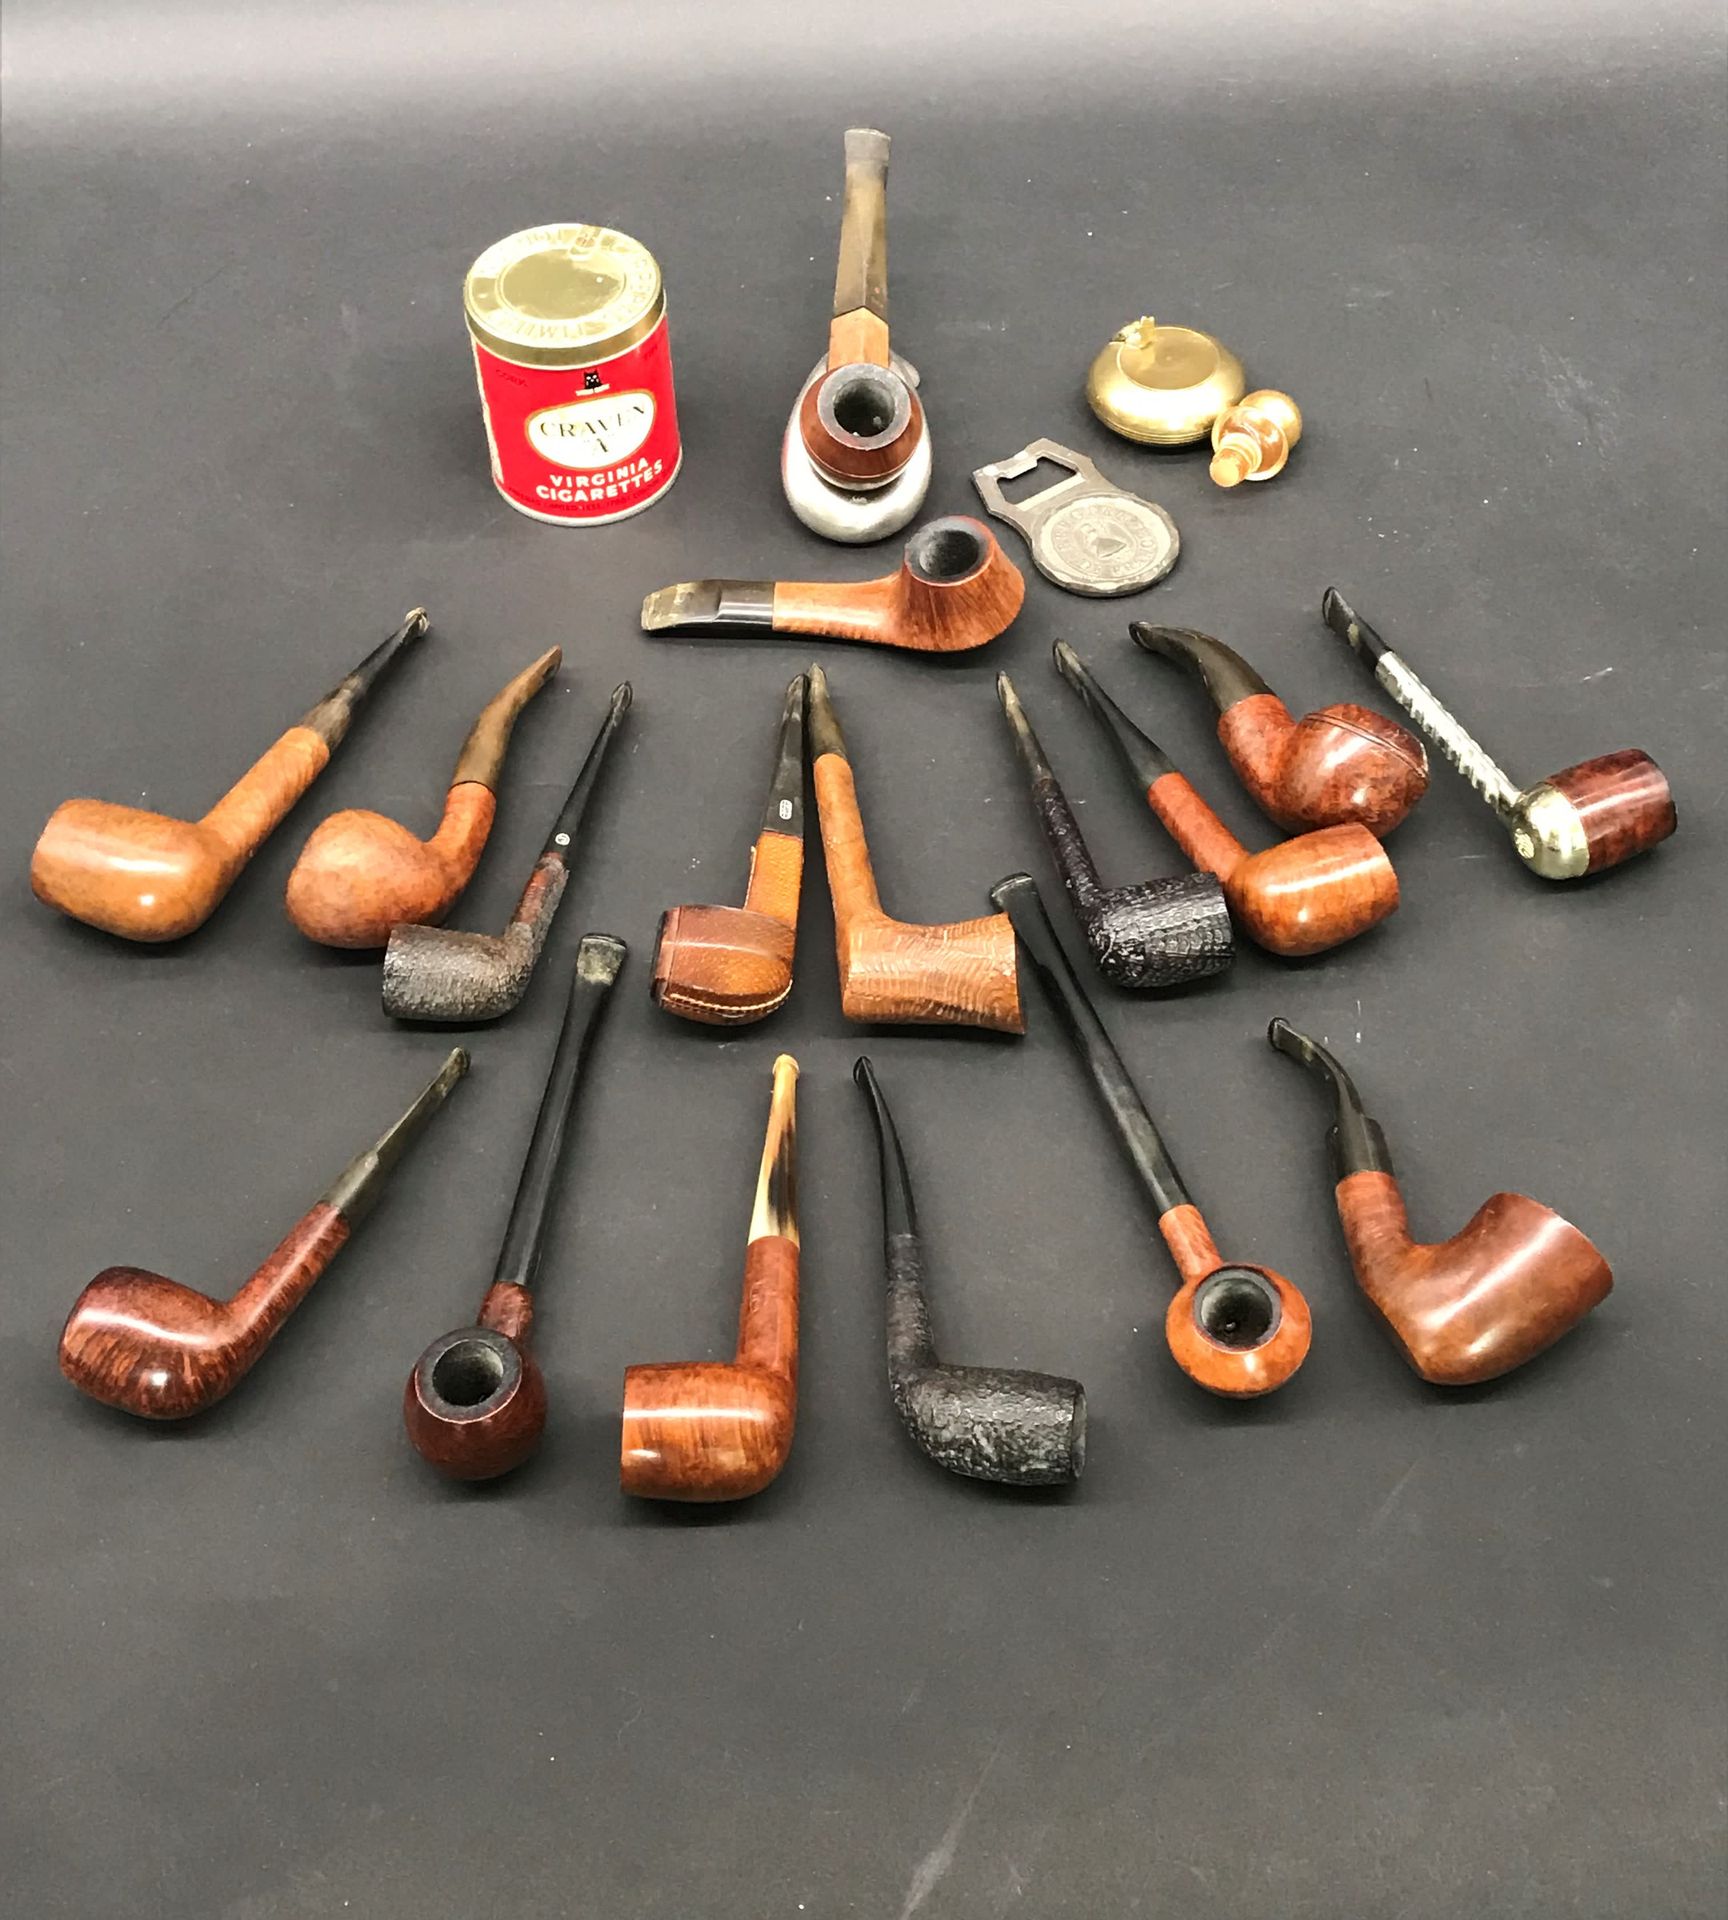 Null 管子的收集

包括斯坦威尔、罗普等人。

附有一个烟斗架、一个烟灰缸、烟草、一个开瓶器和一个塞子。

17件